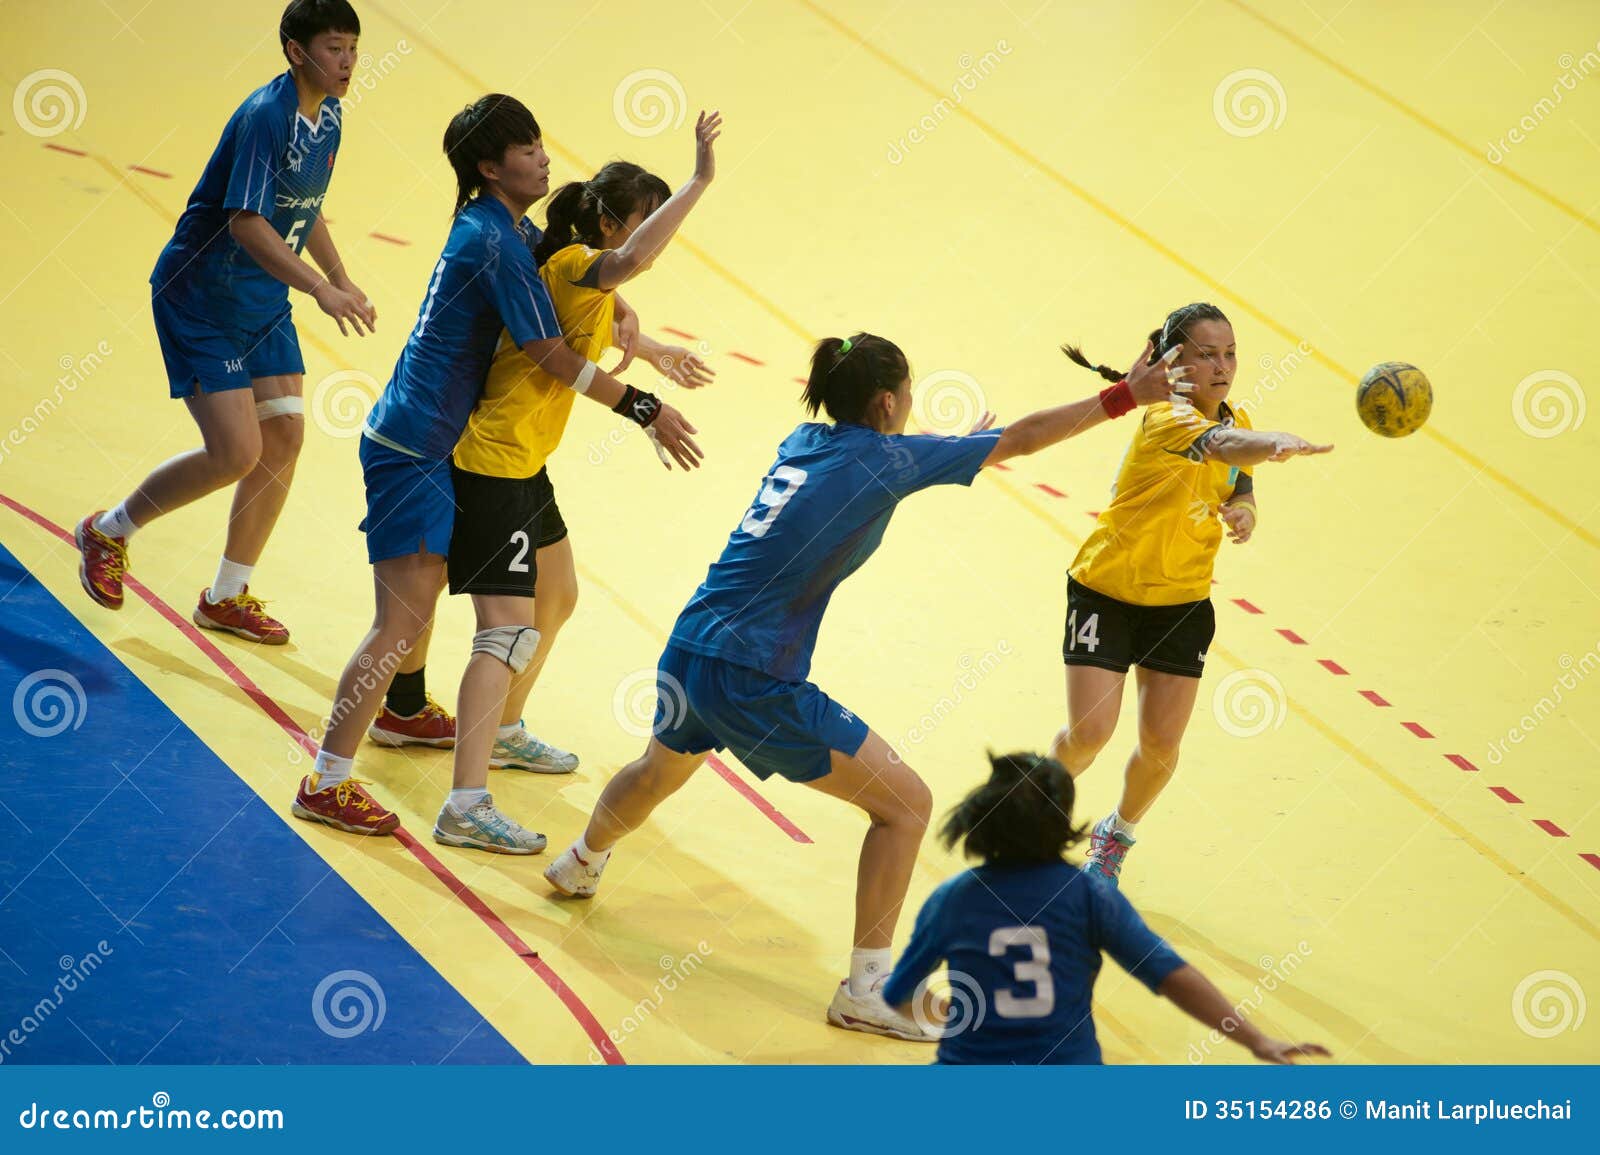 Handball Sport. Editorial Photo - Image: 35154286